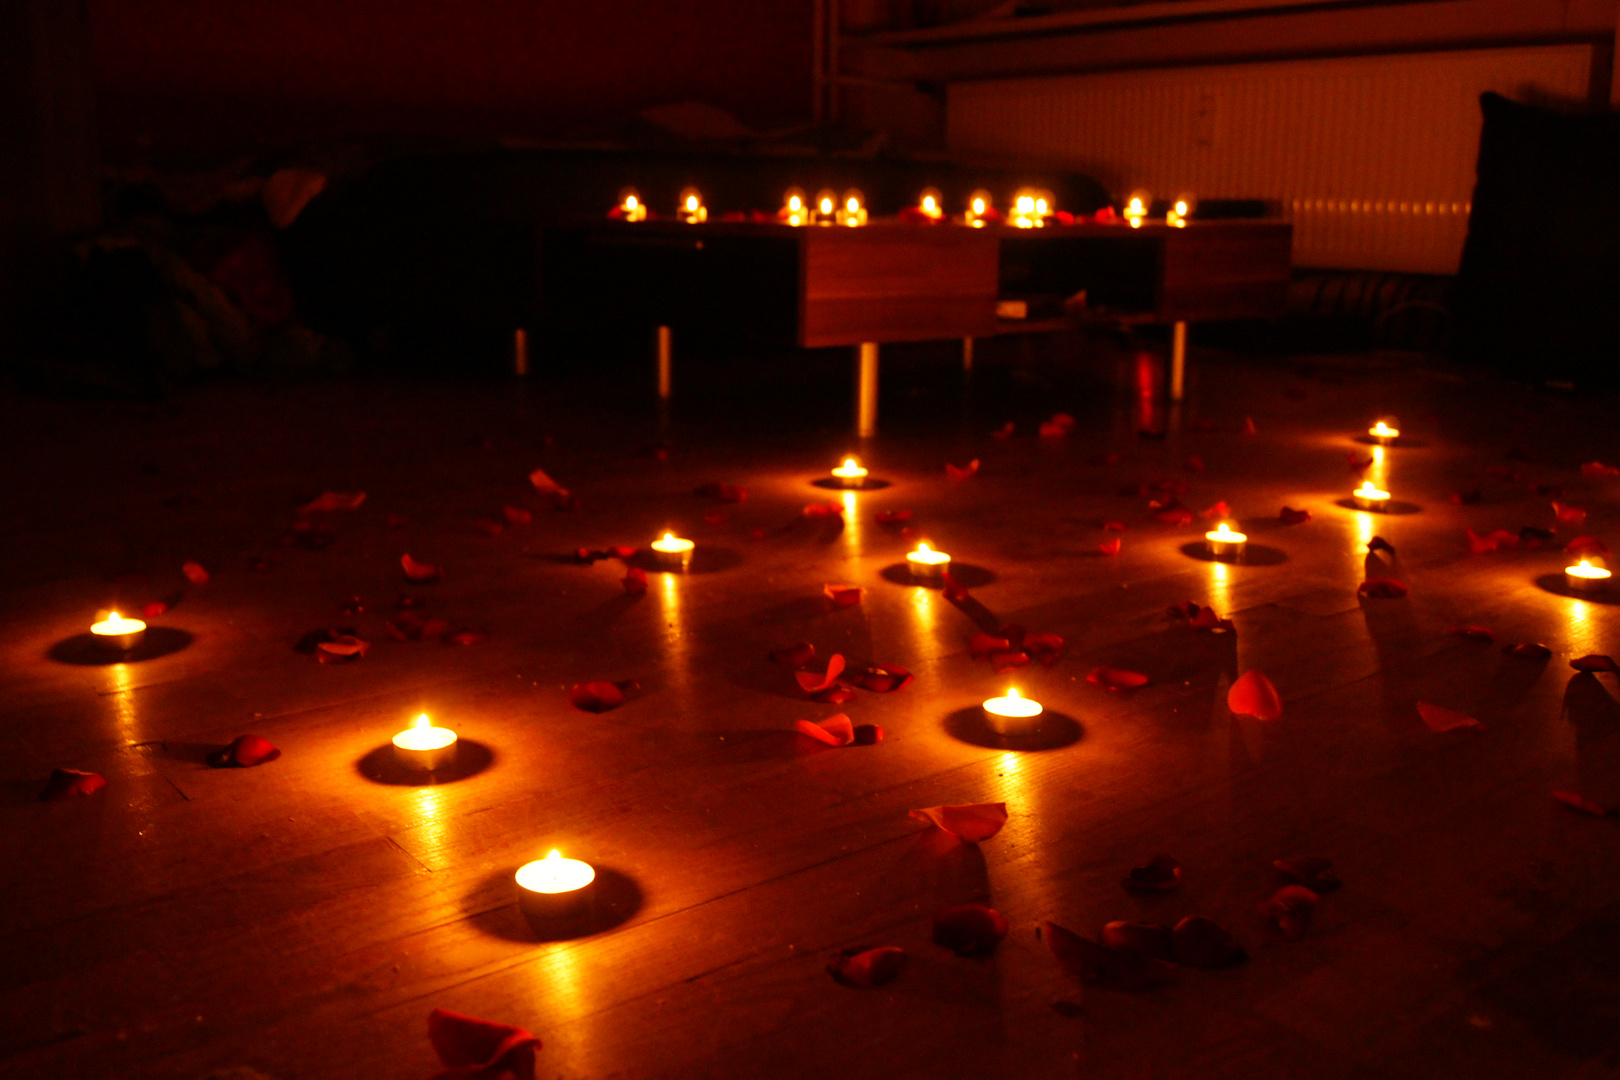 Romantisch mit Kerzen